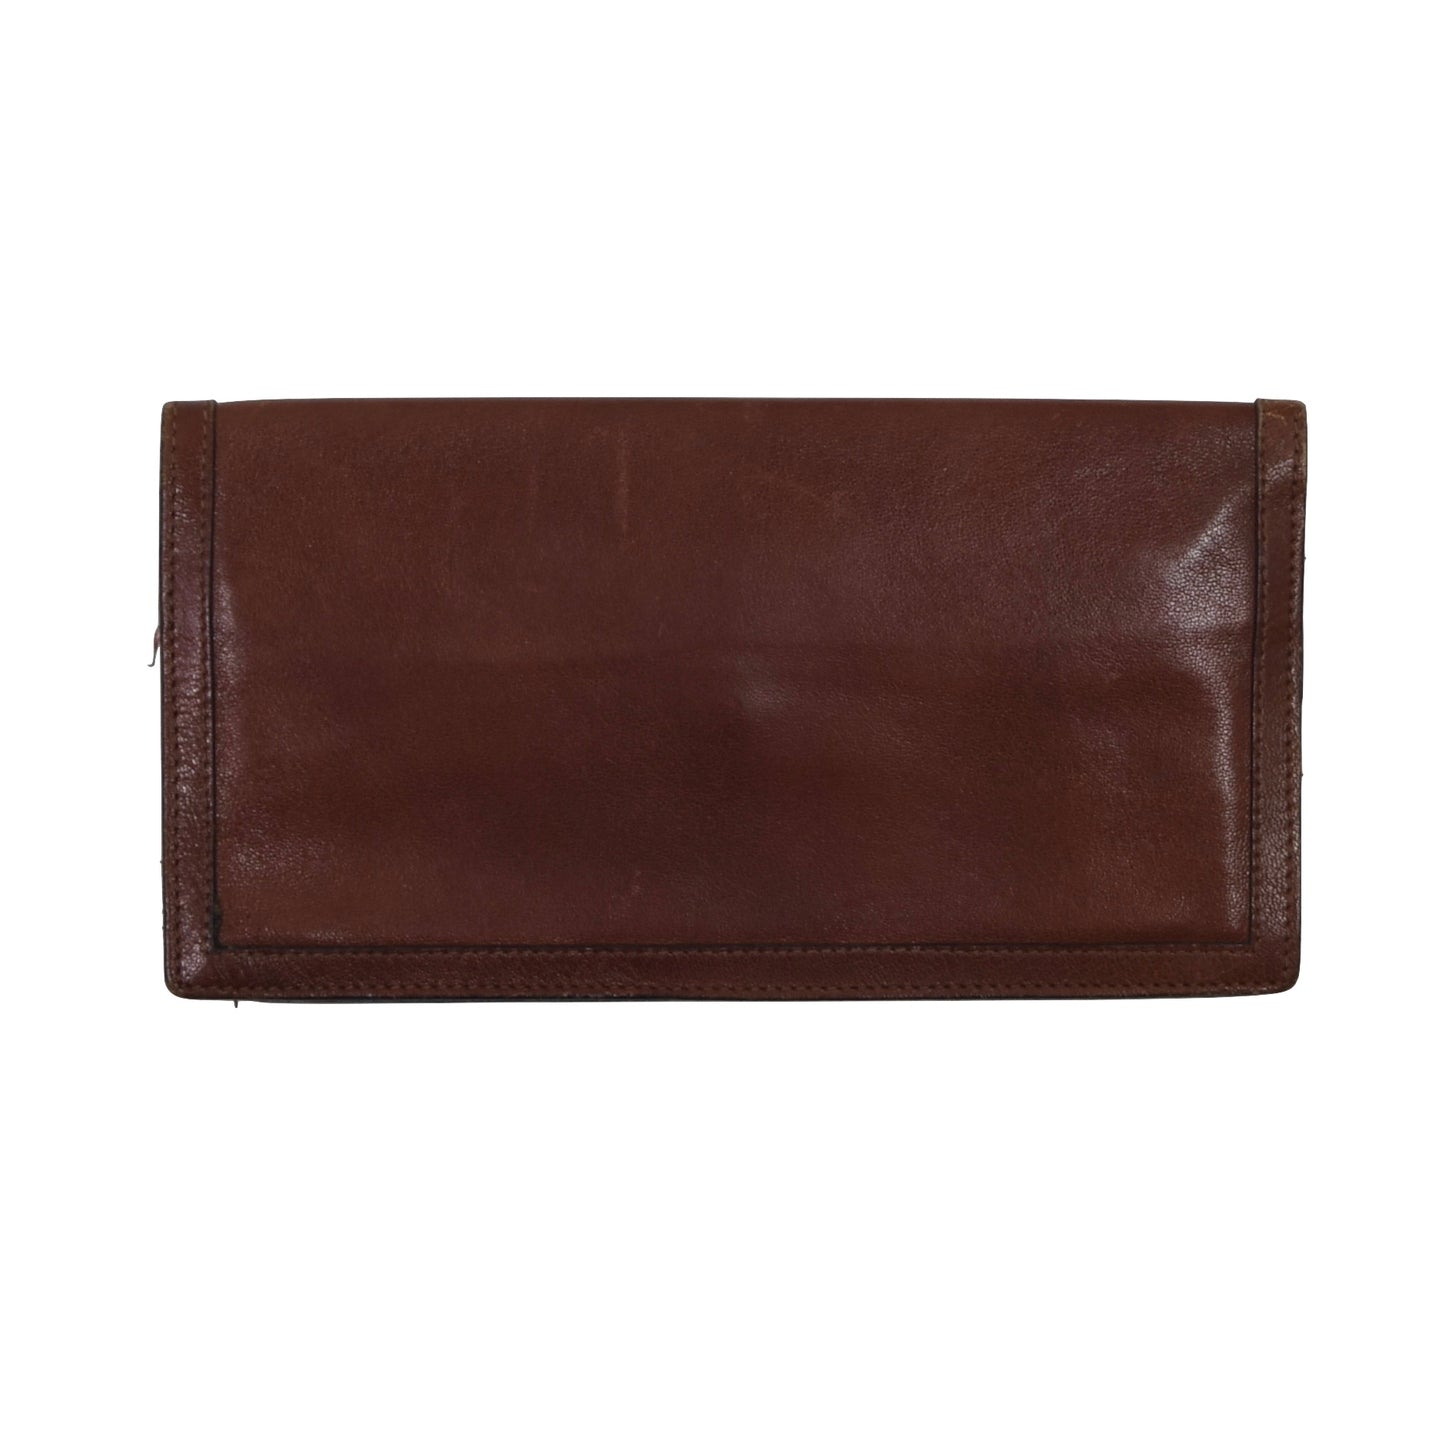 Vintage Etienne Aigner Leather Wallet - Brown-Red